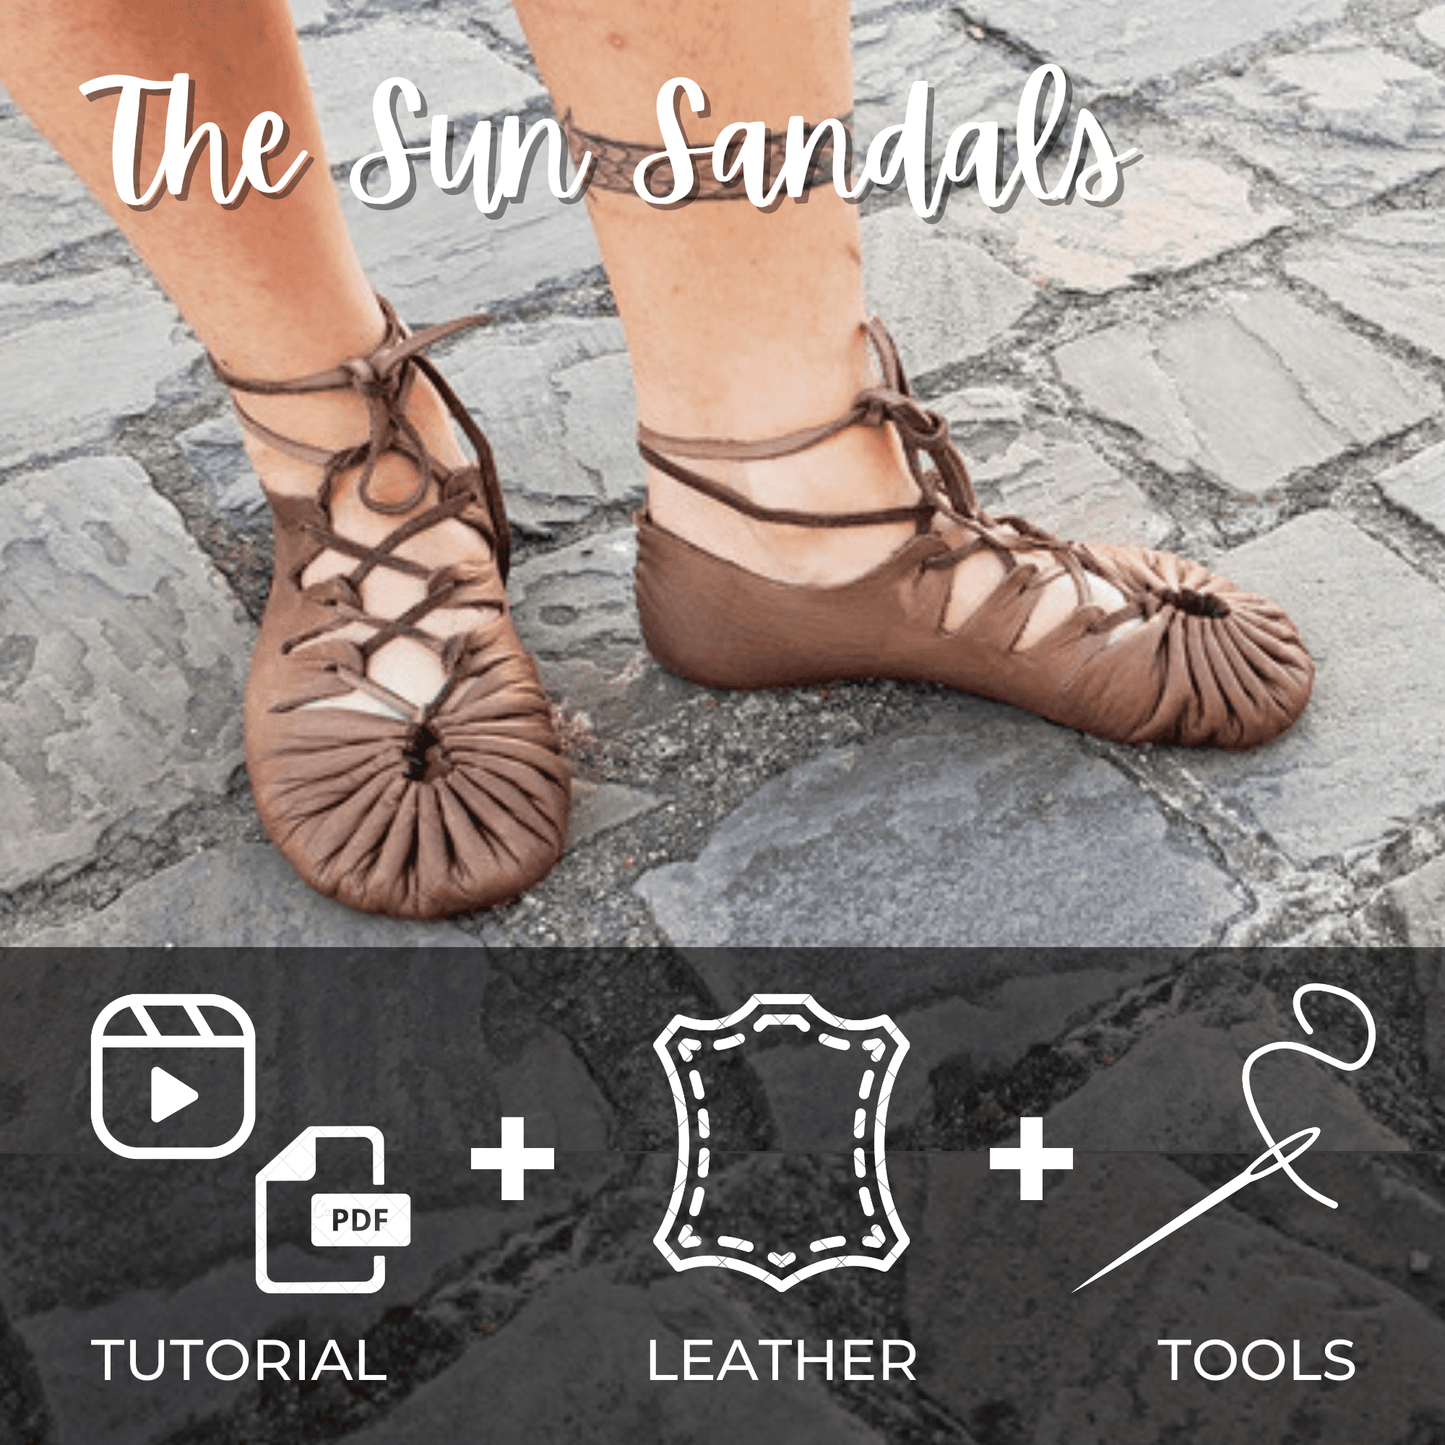 DIY KIT for the "Sun" Sandals Earthingmoccasins